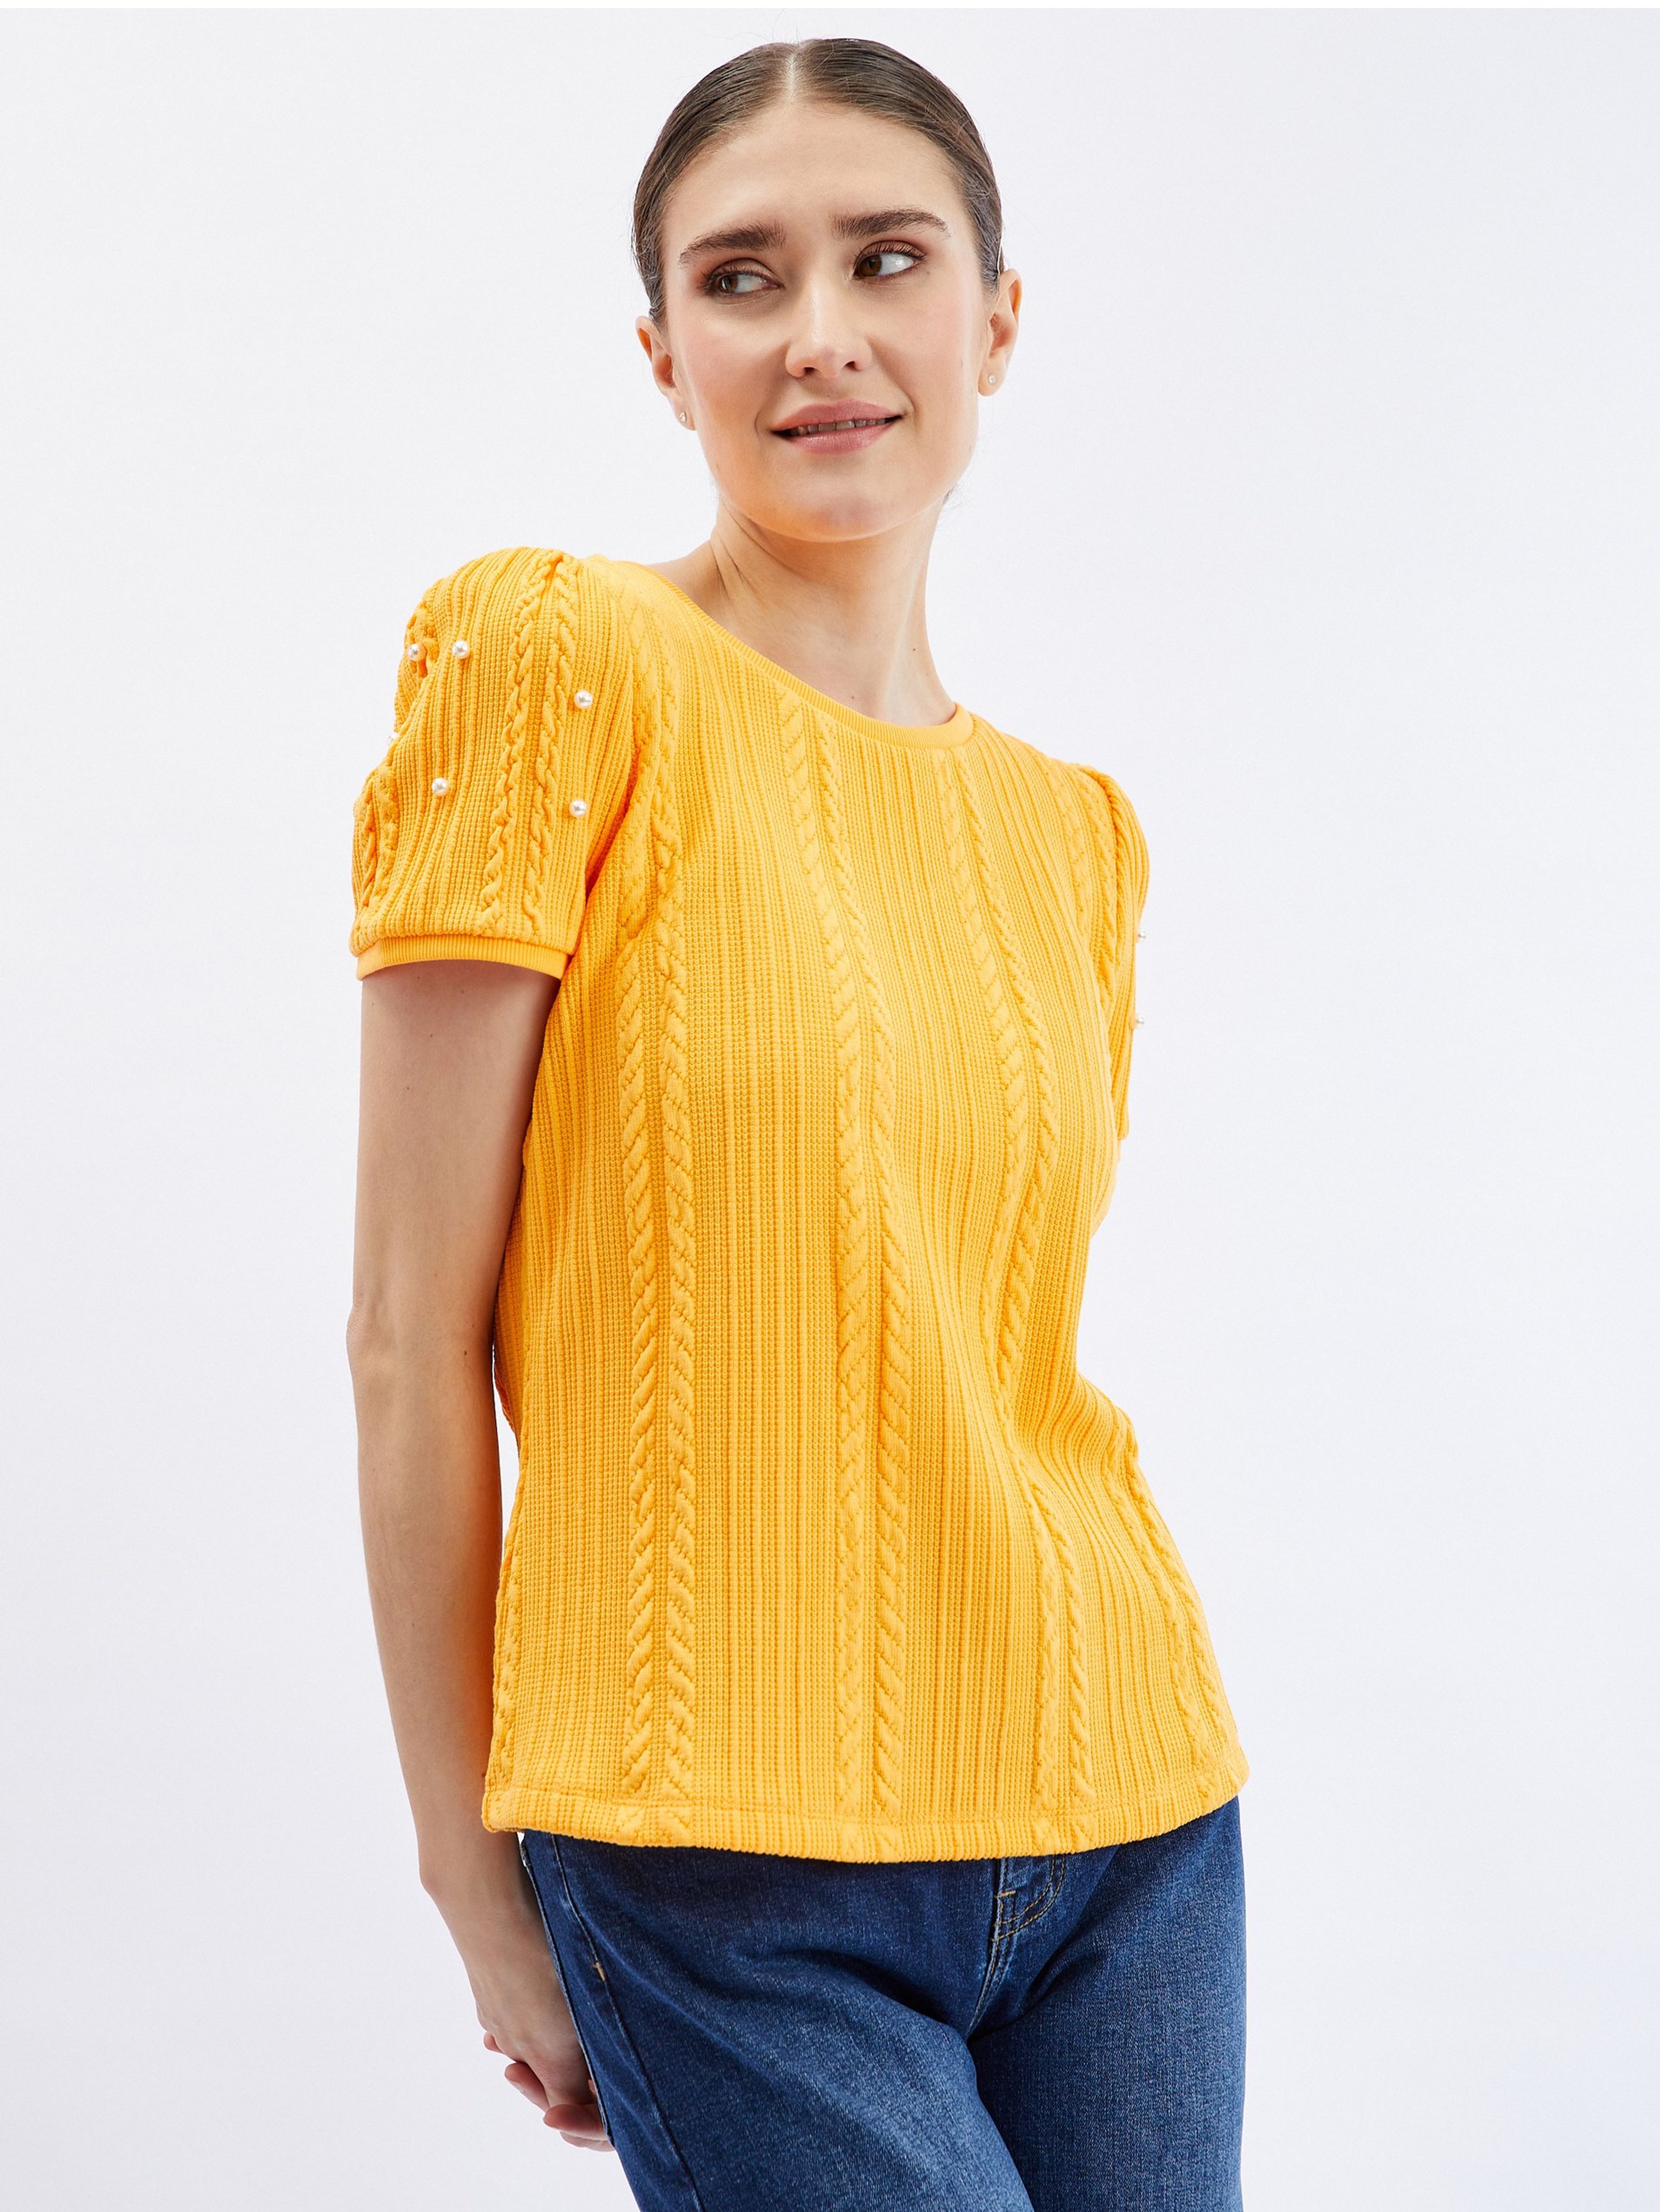 Žluté dámské tričko s ozdobnými detaily ORSAY